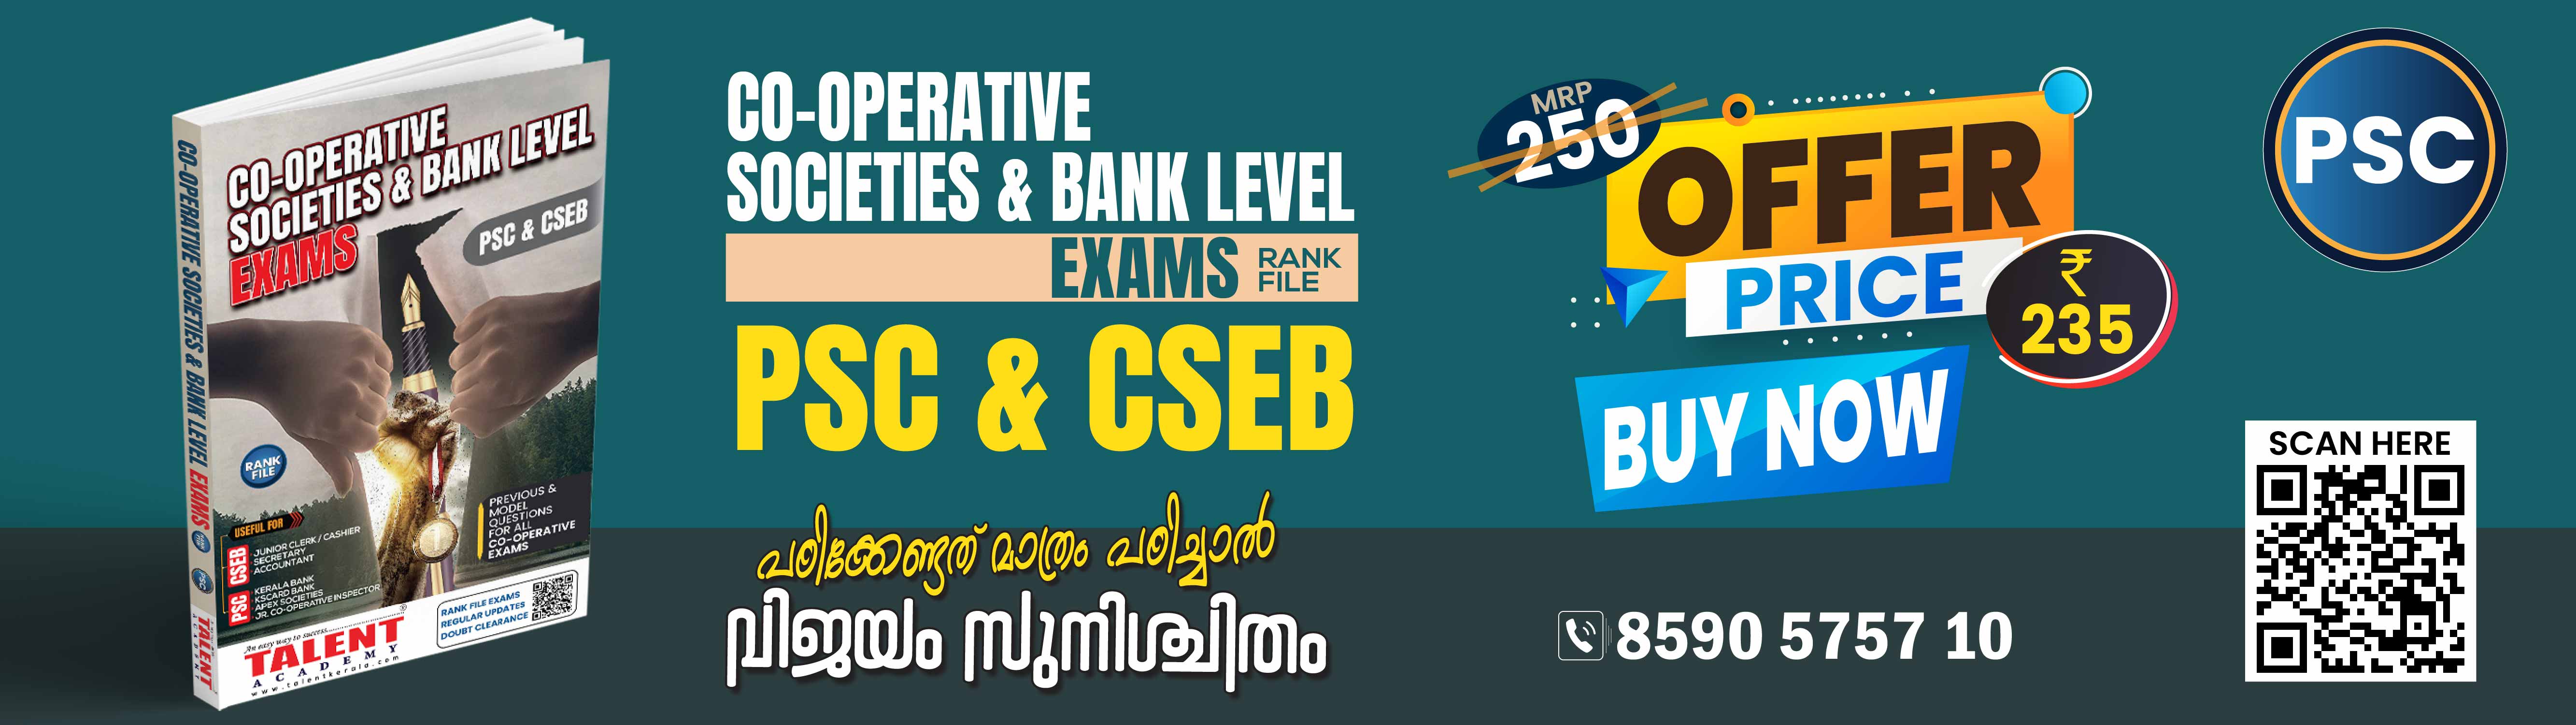 Co-Operative Societies & Bank Level Exams Rank File